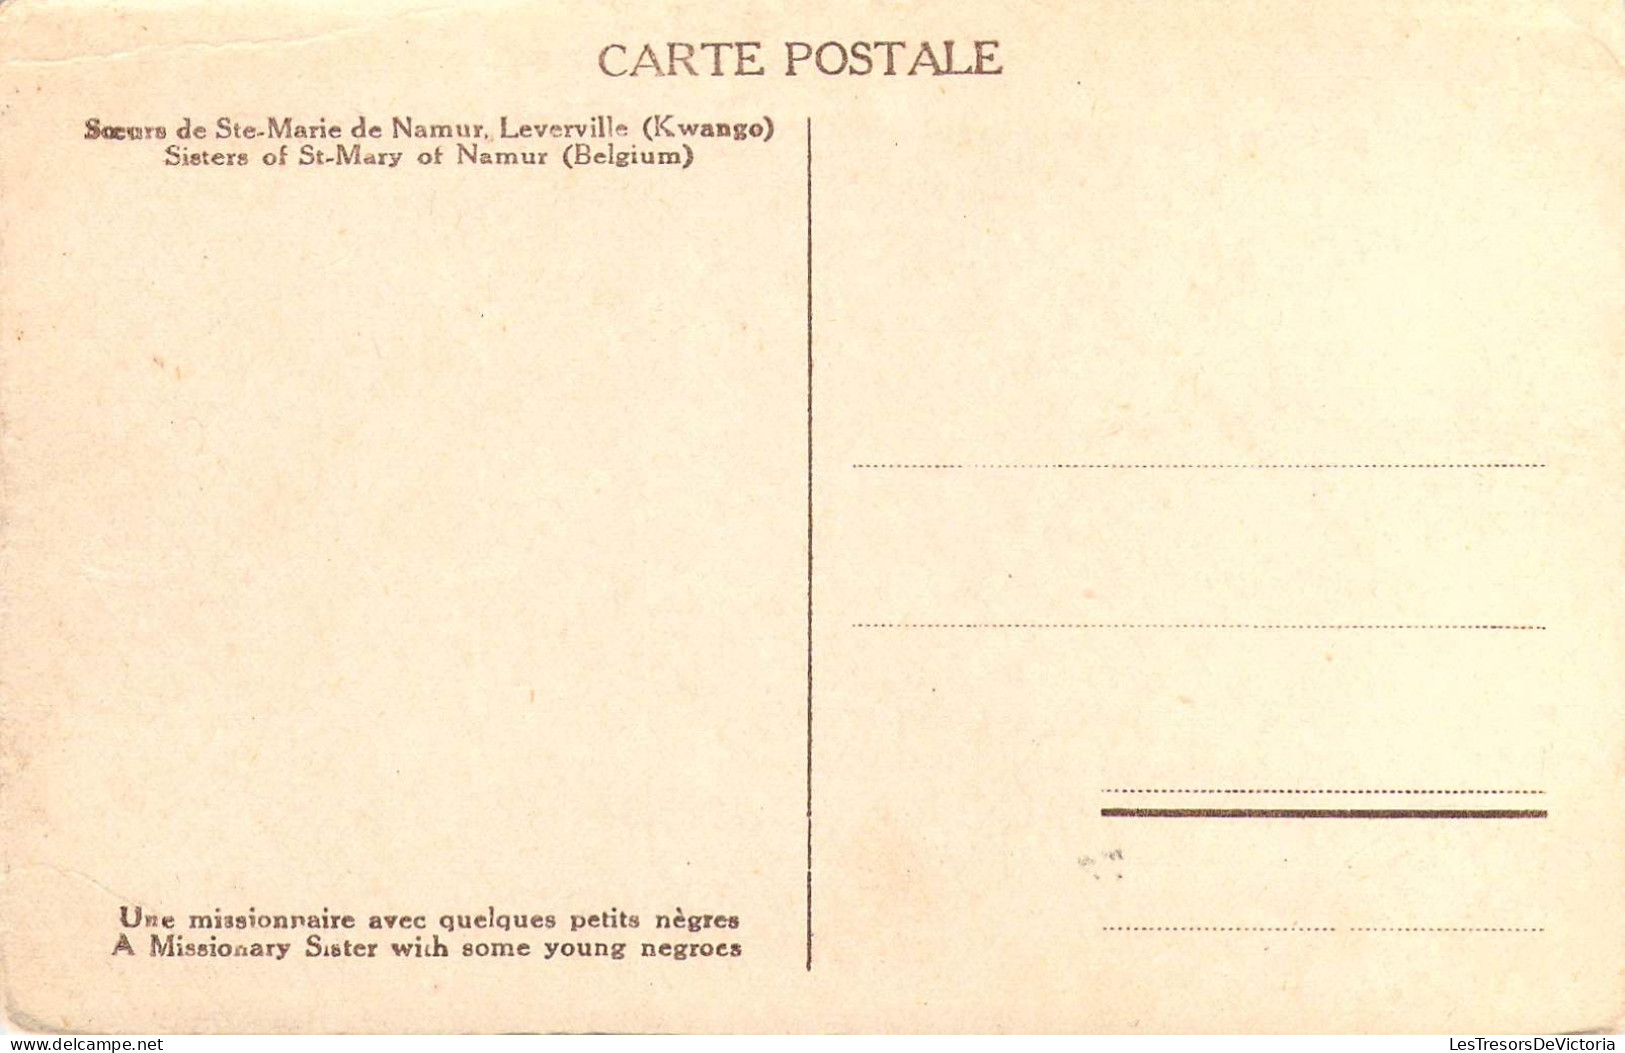 CONGO BELGE - Sœurs De Ste-Marie De Namur - Leverville ( Kwango ) - Carte Postale Ancienne - Belgian Congo